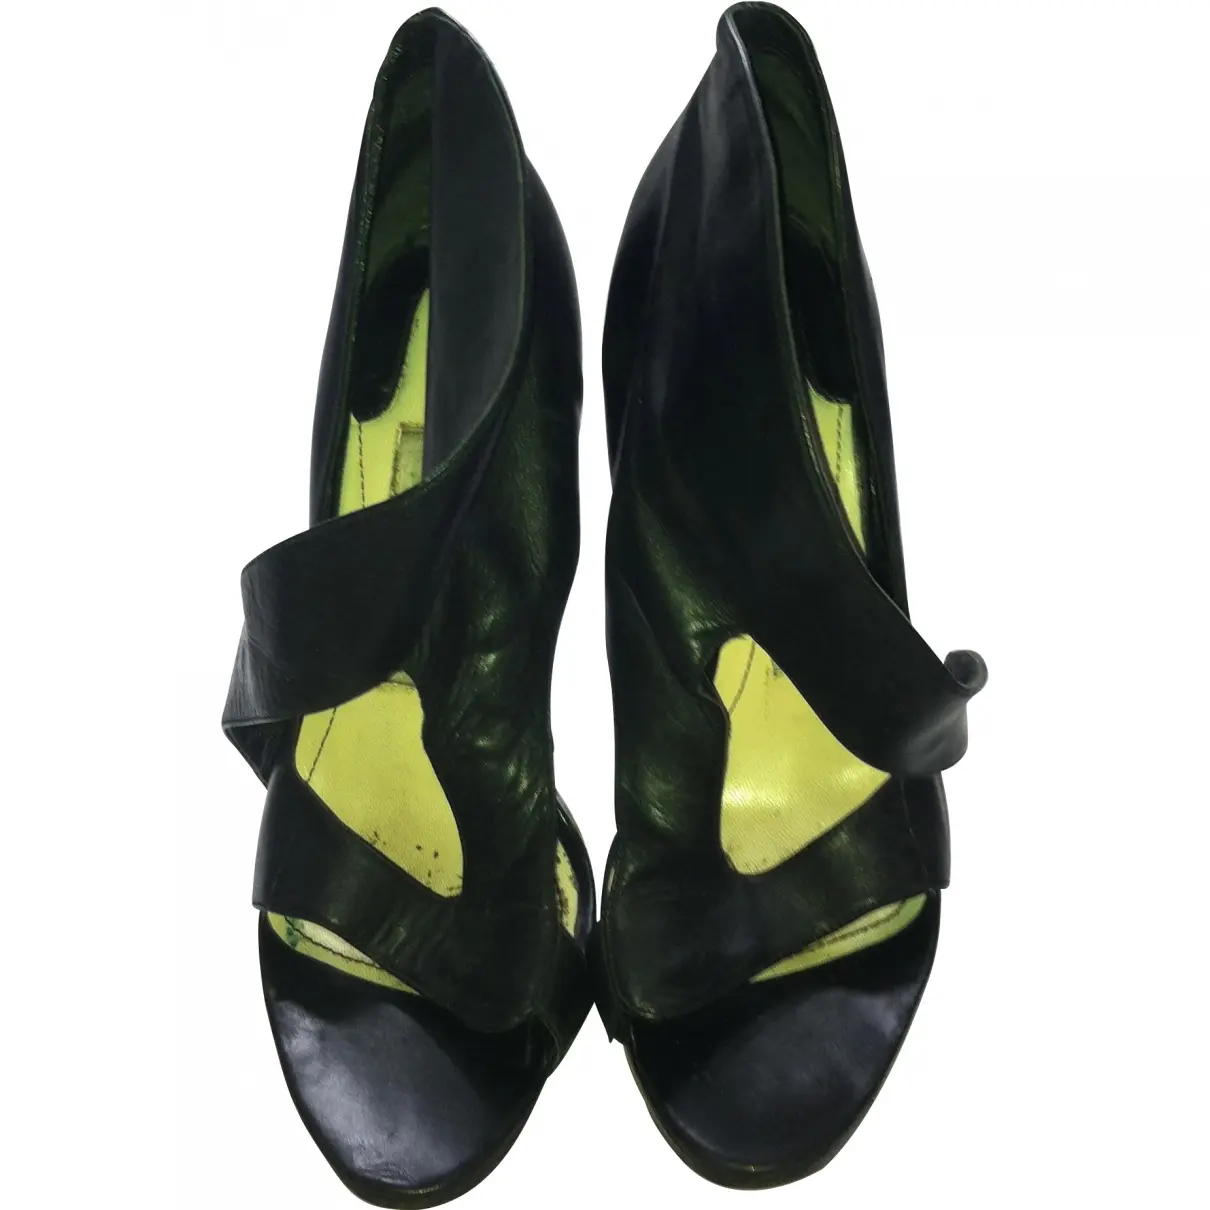 Camilla Skovgaard Leather heels for sale